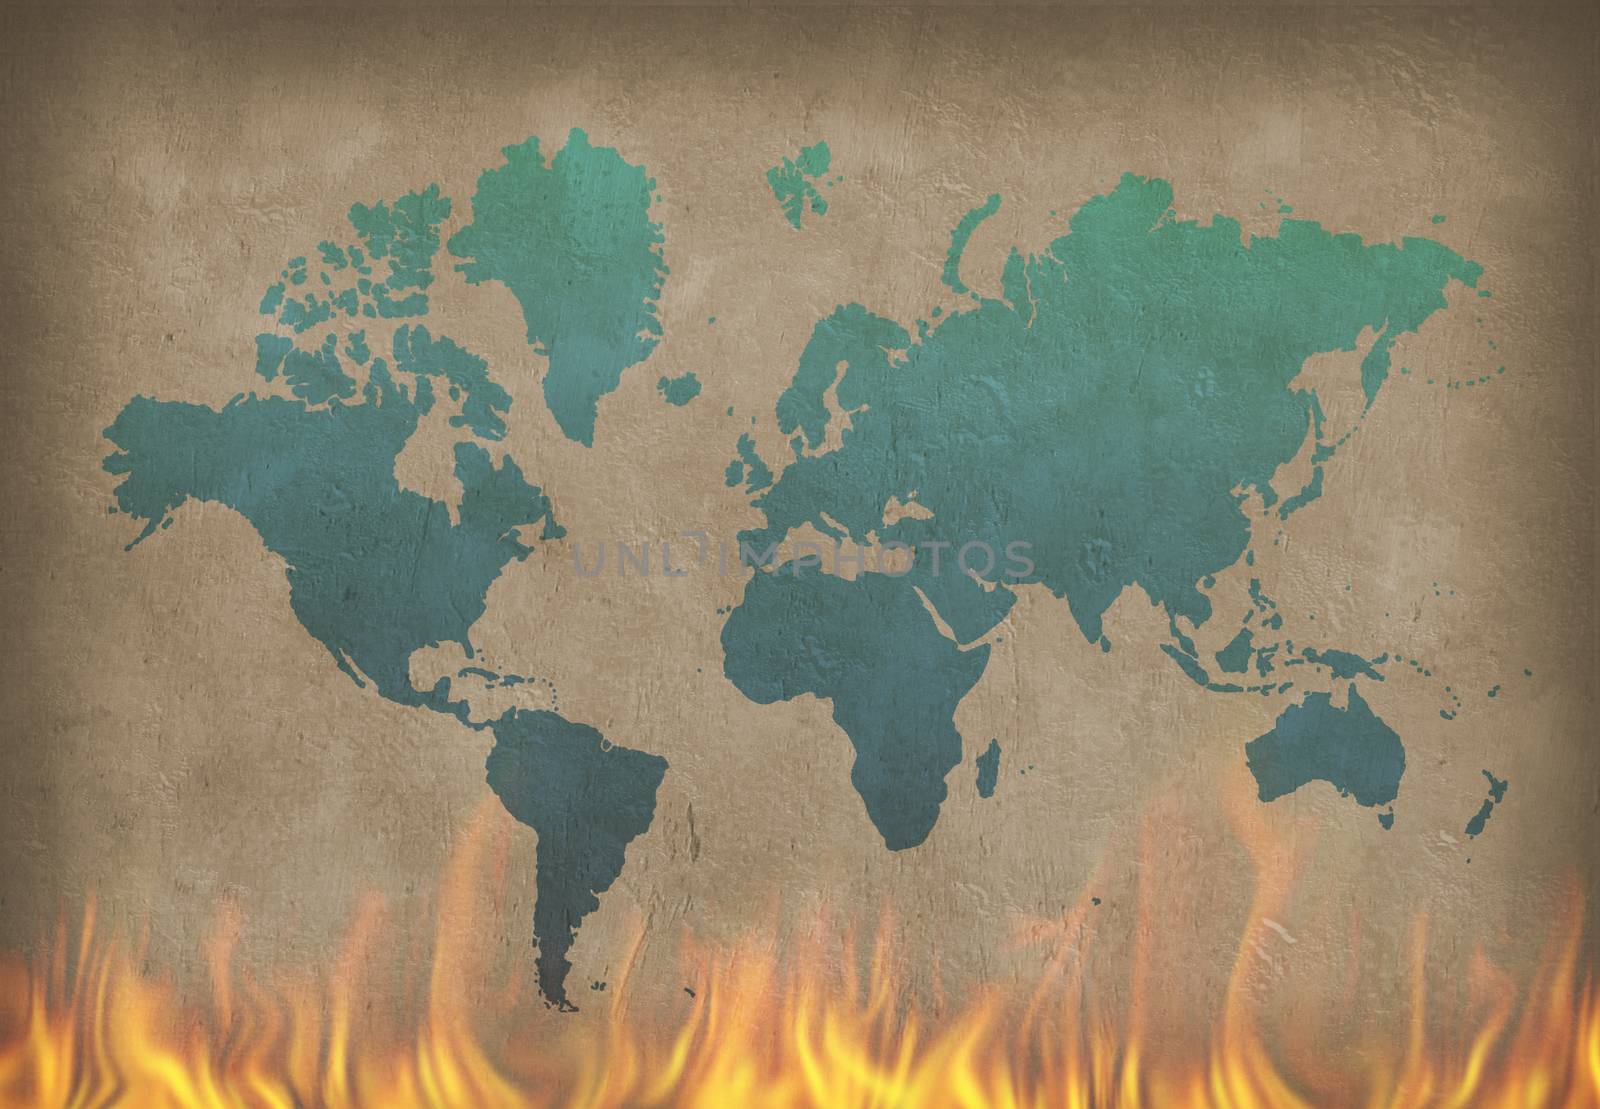 World in fire by applesstock